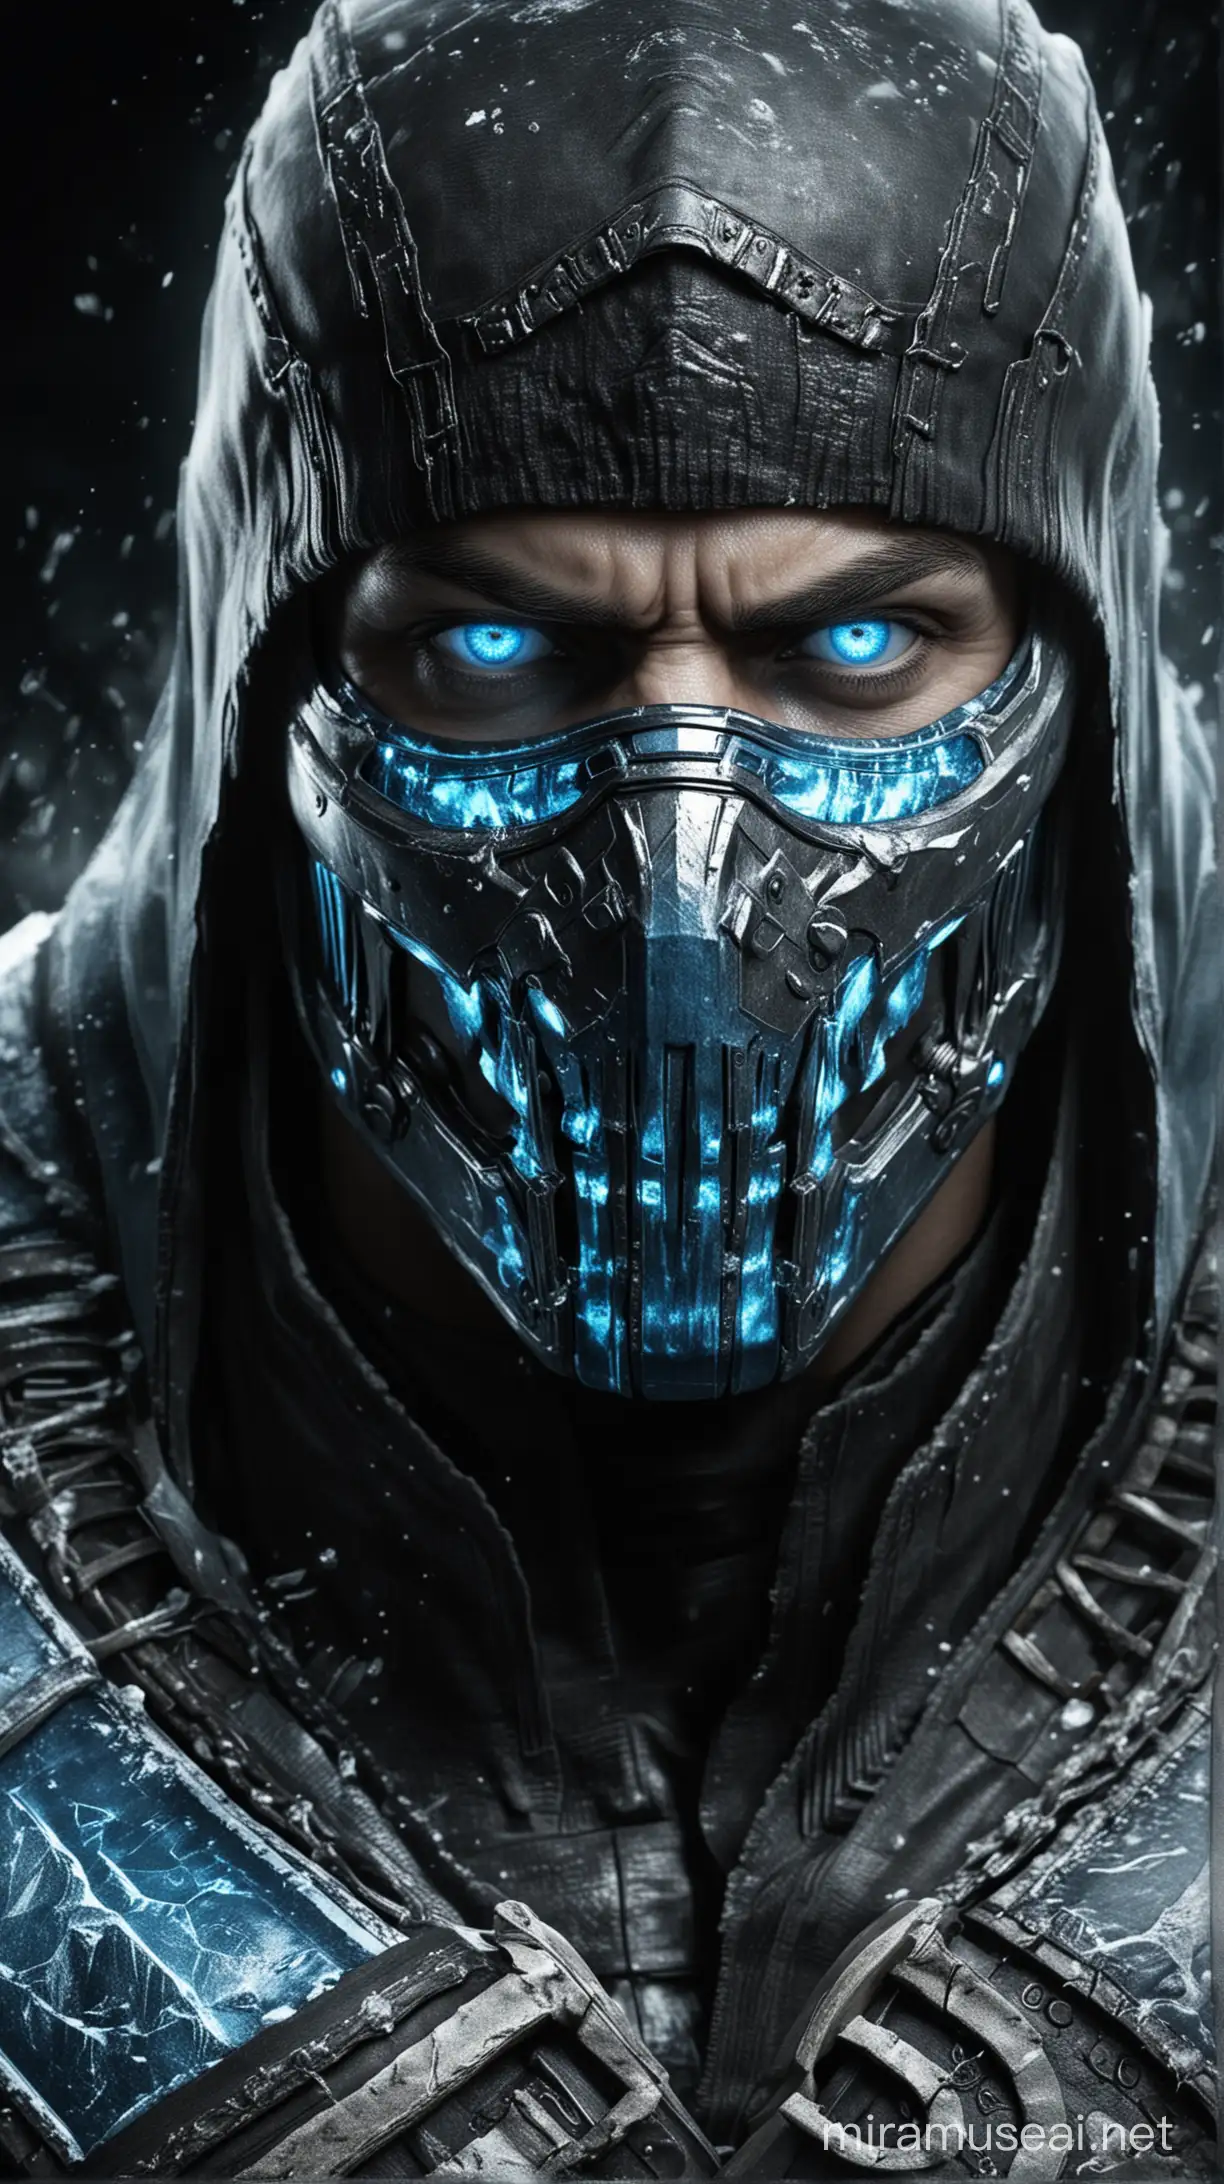 SubZero Mortal Kombat XL Frozen Warrior with Icy Blue Eyes